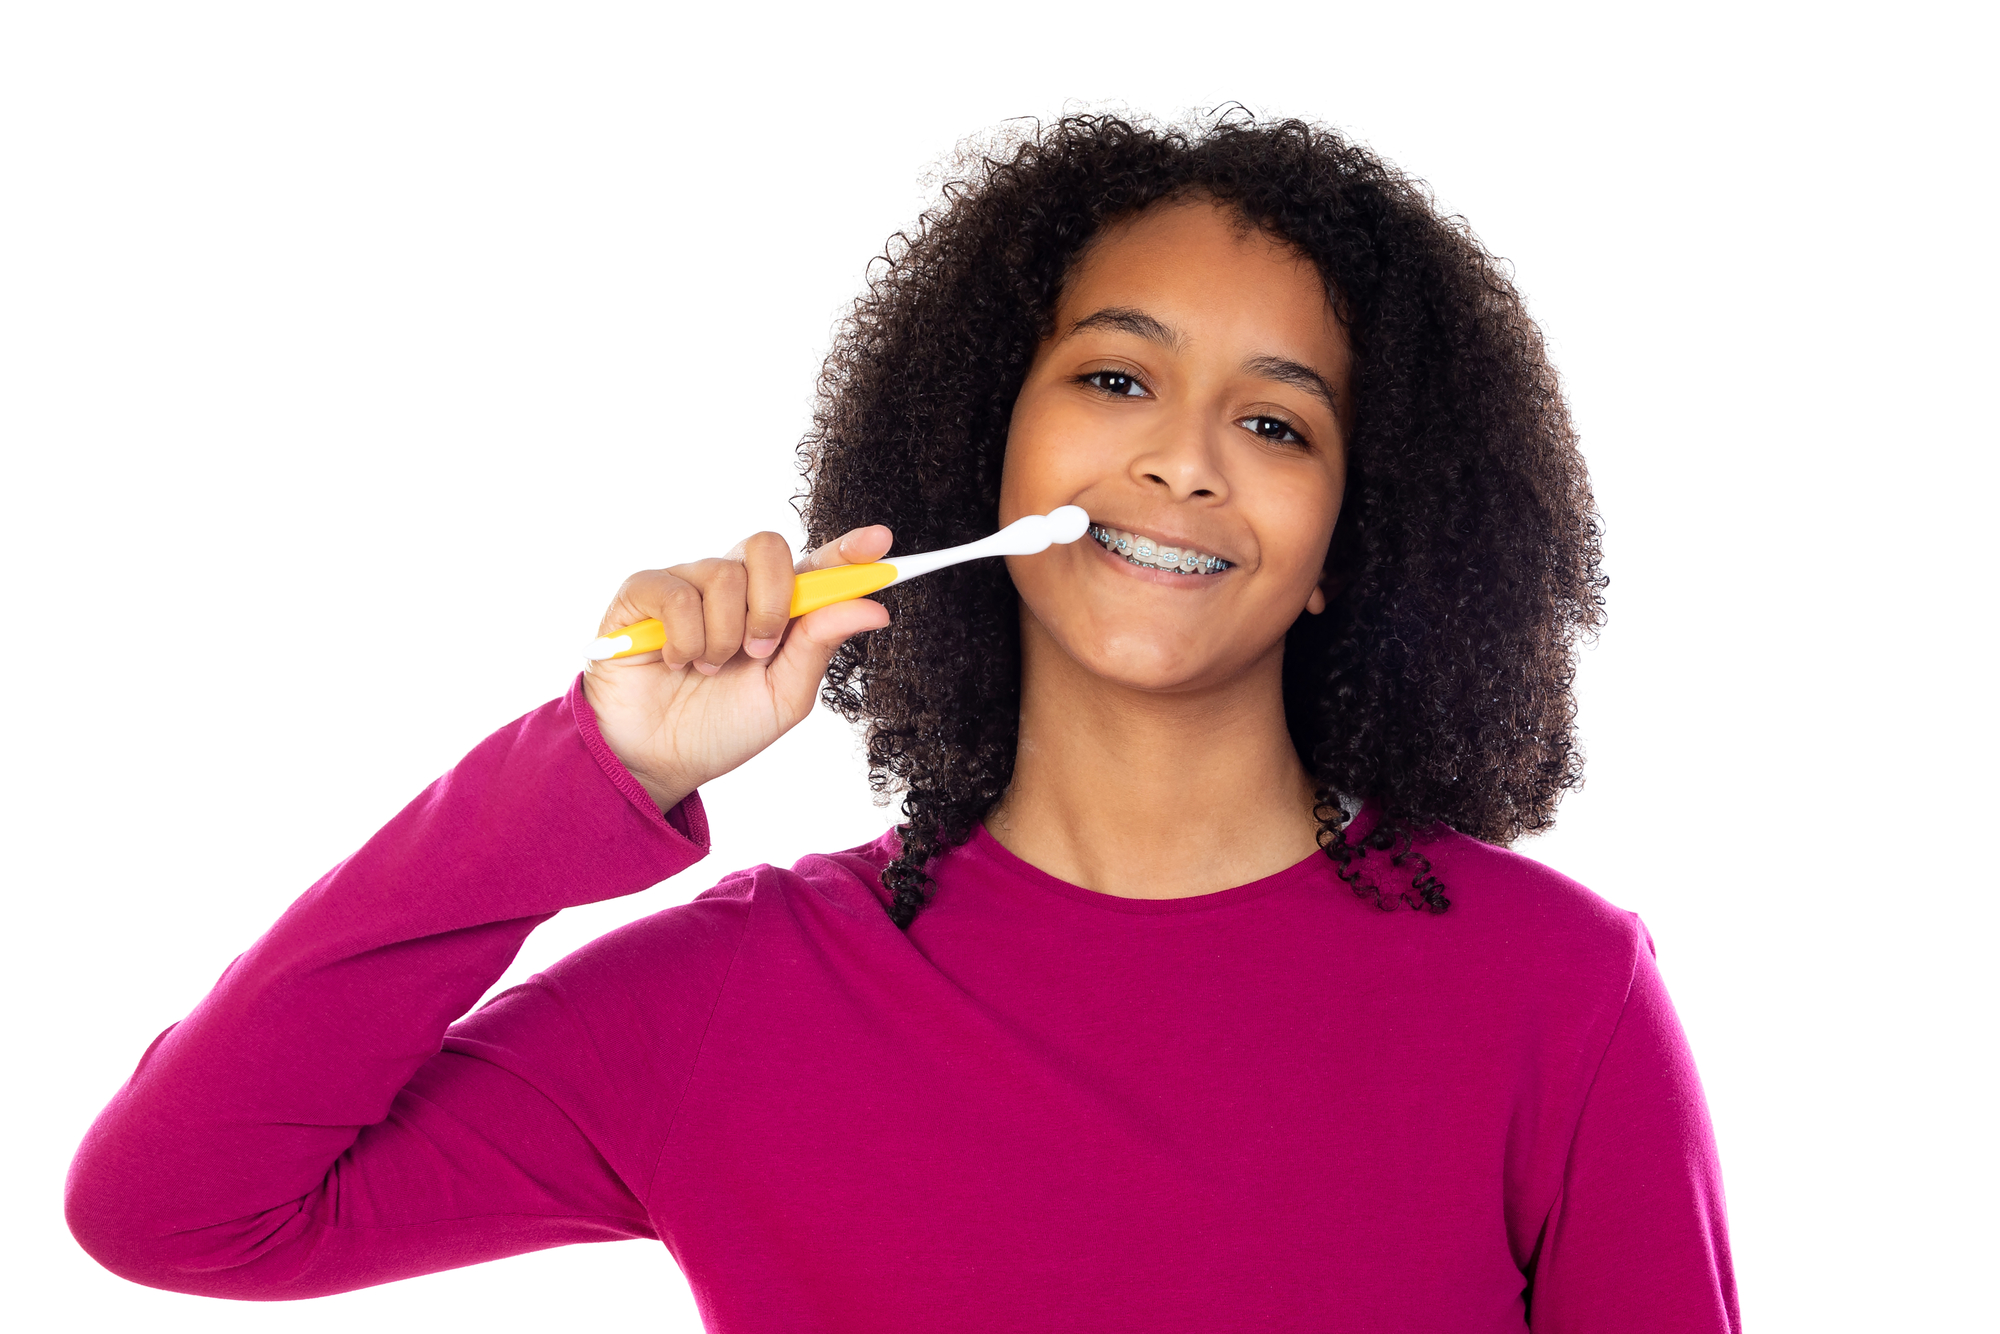 African american teenage girl brusher her teeth and has braces fun